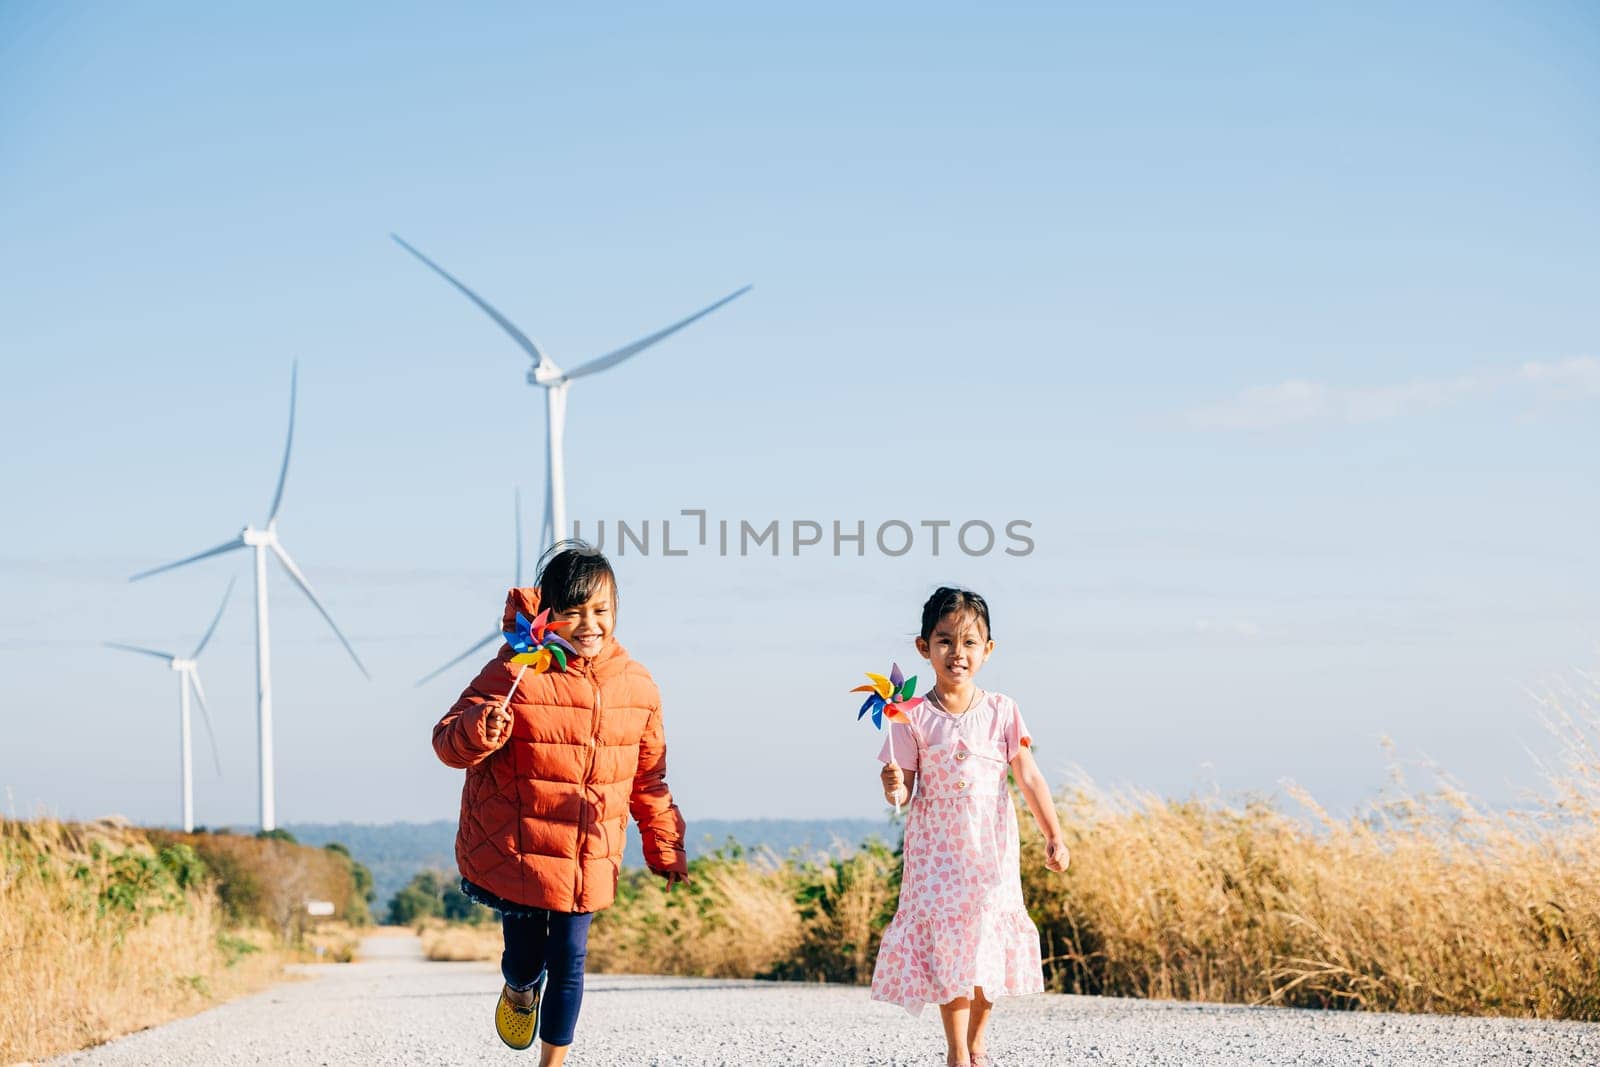 Two kids girl holding pinwheel joyfully run by windmills. Family near turbines embodies clean energy essence. Children happiness windmill circle against sun symbolizes sustainable cheerful community.